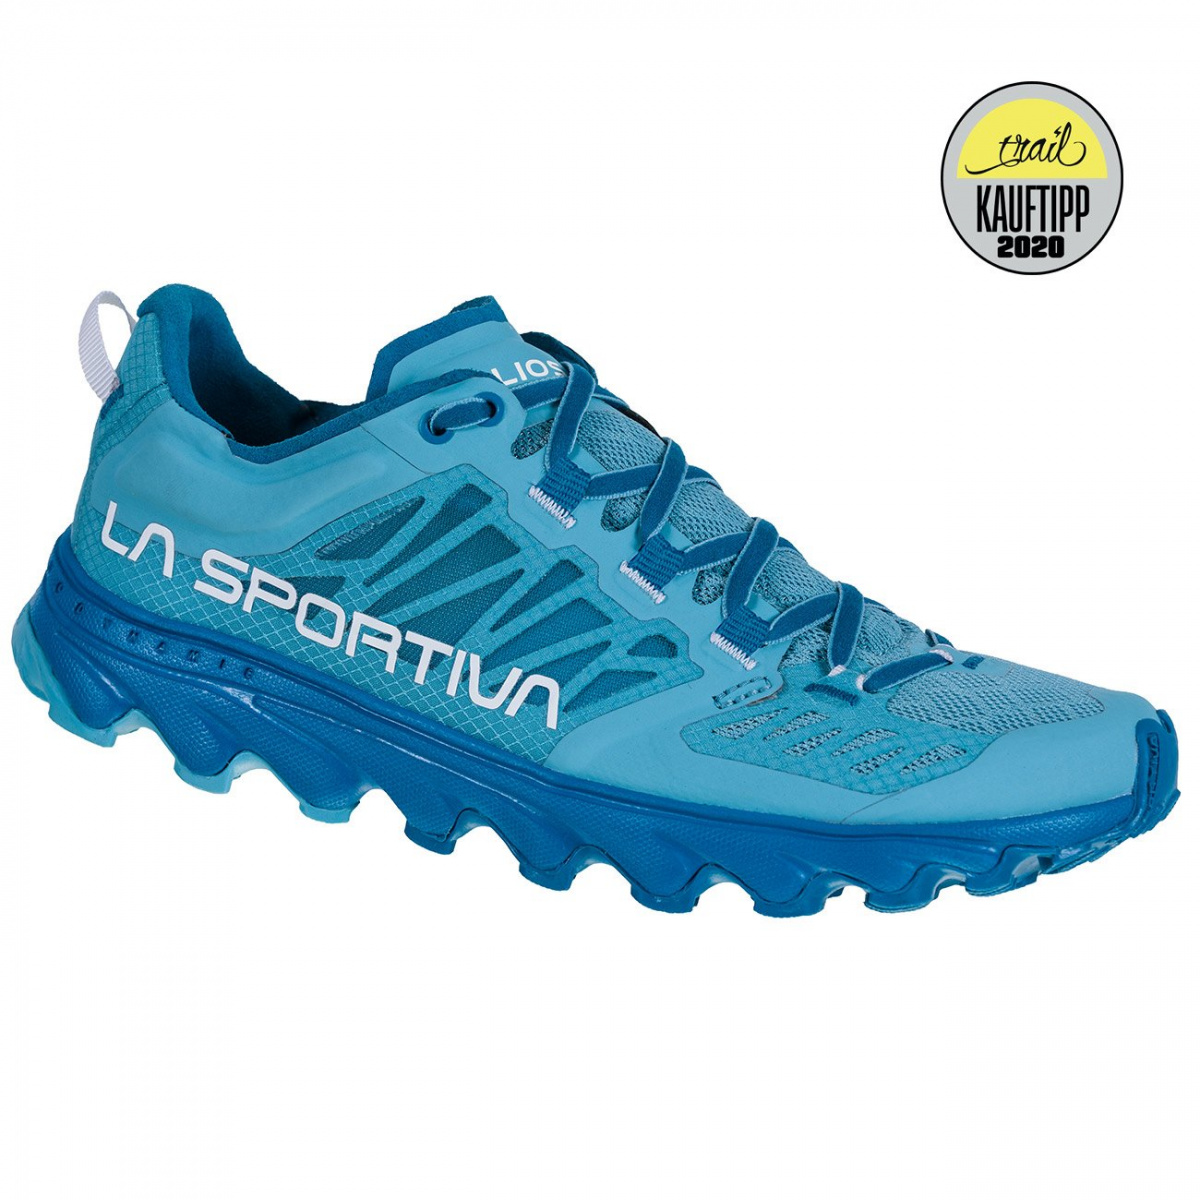 Dámské běžecké boty La Sportiva Helios III pacific blue/neptune 37,5 EU